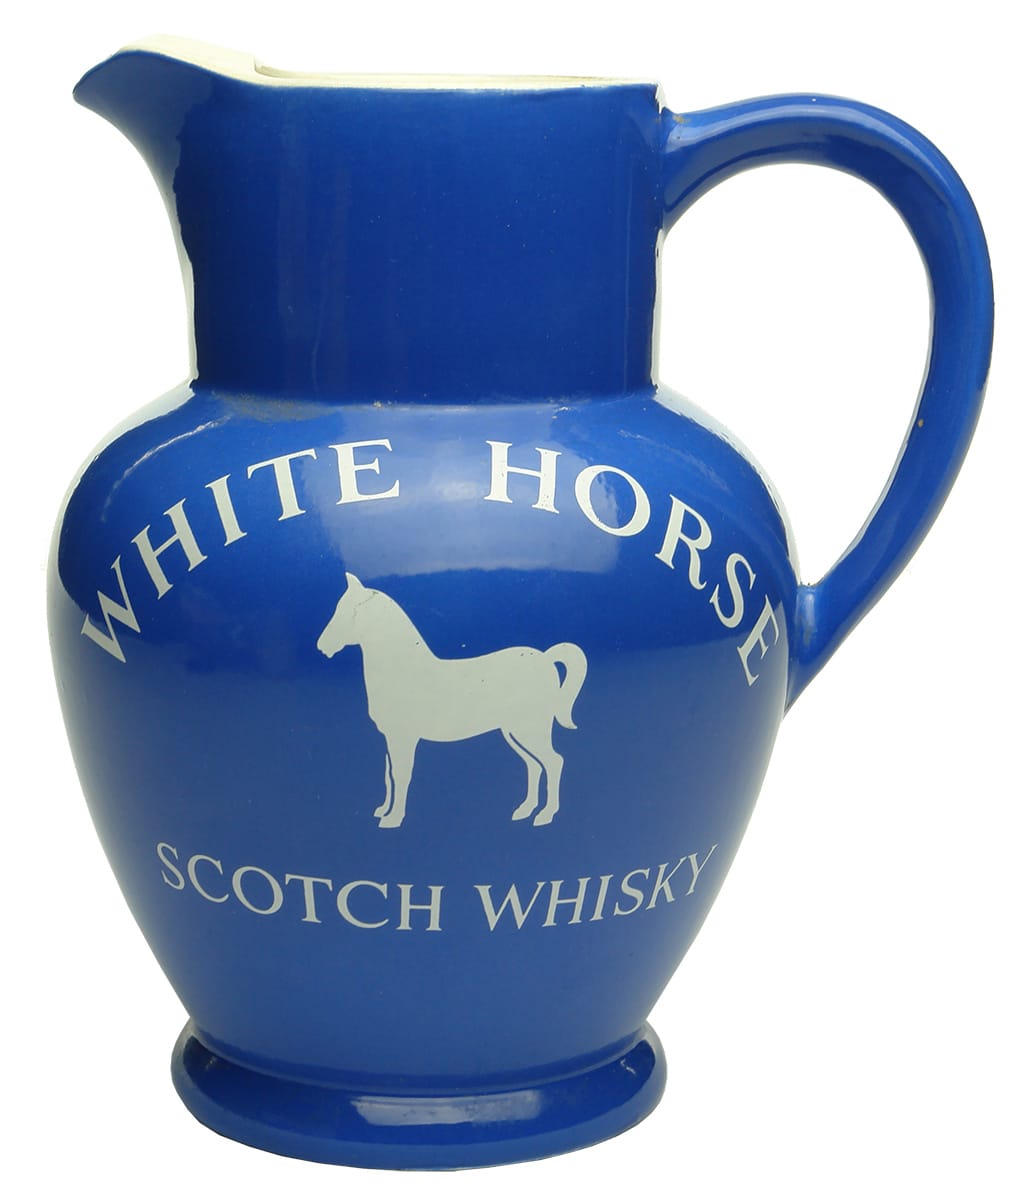 White Horse Scotch Whisky Water Jug